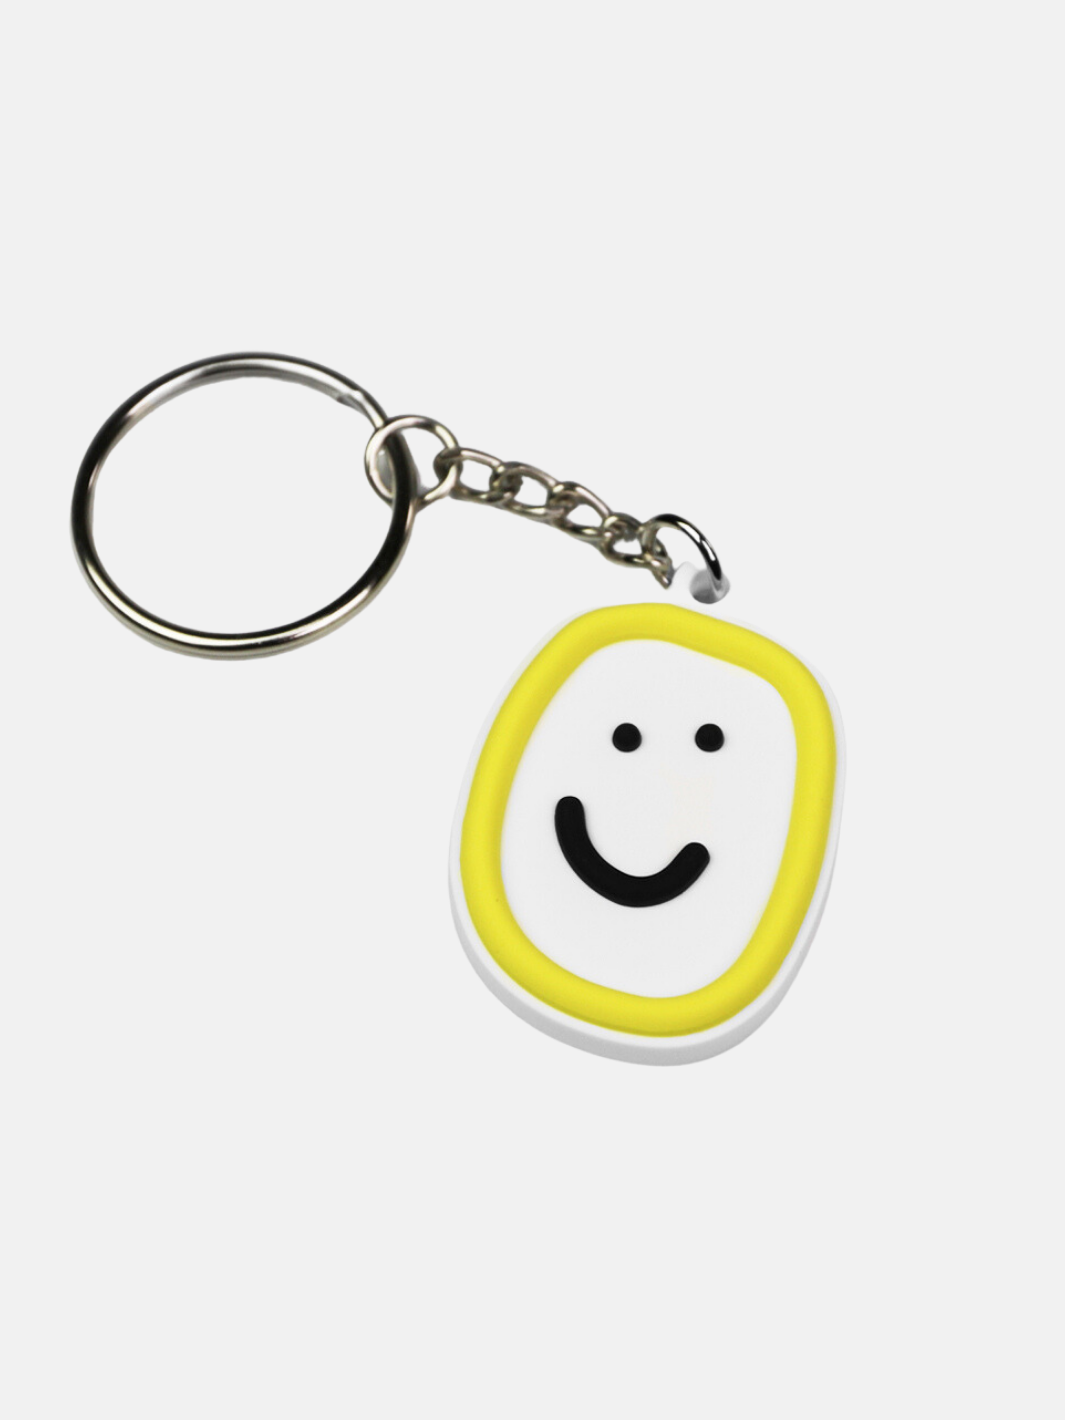 the happiness keychain